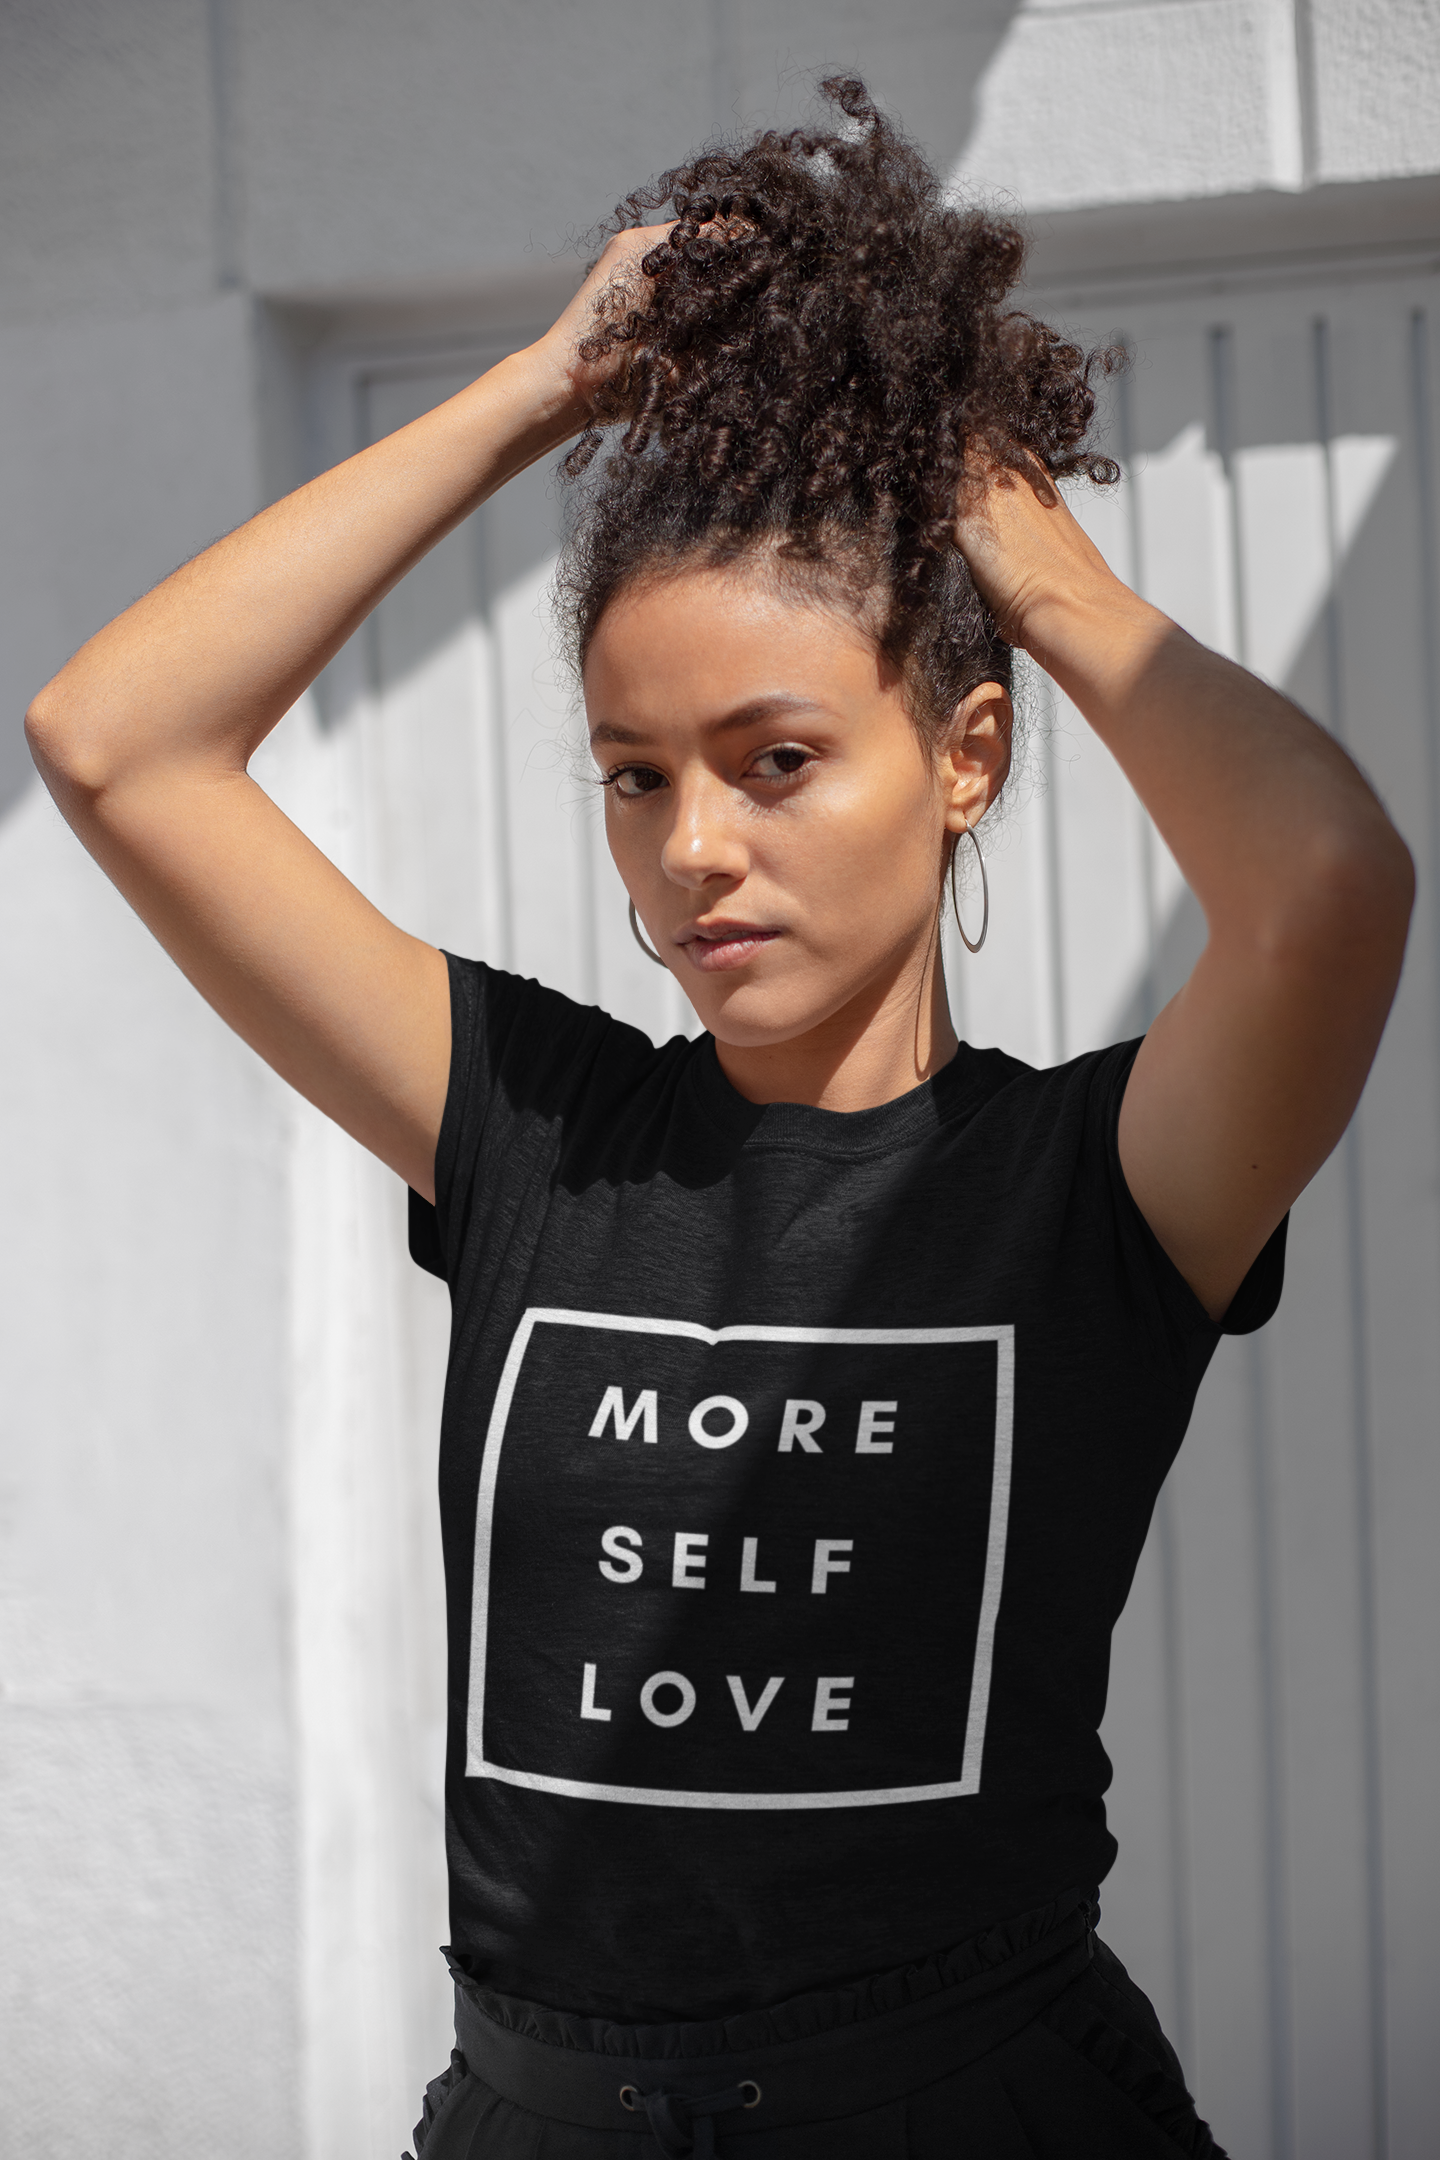 More Self Love T-Shirt